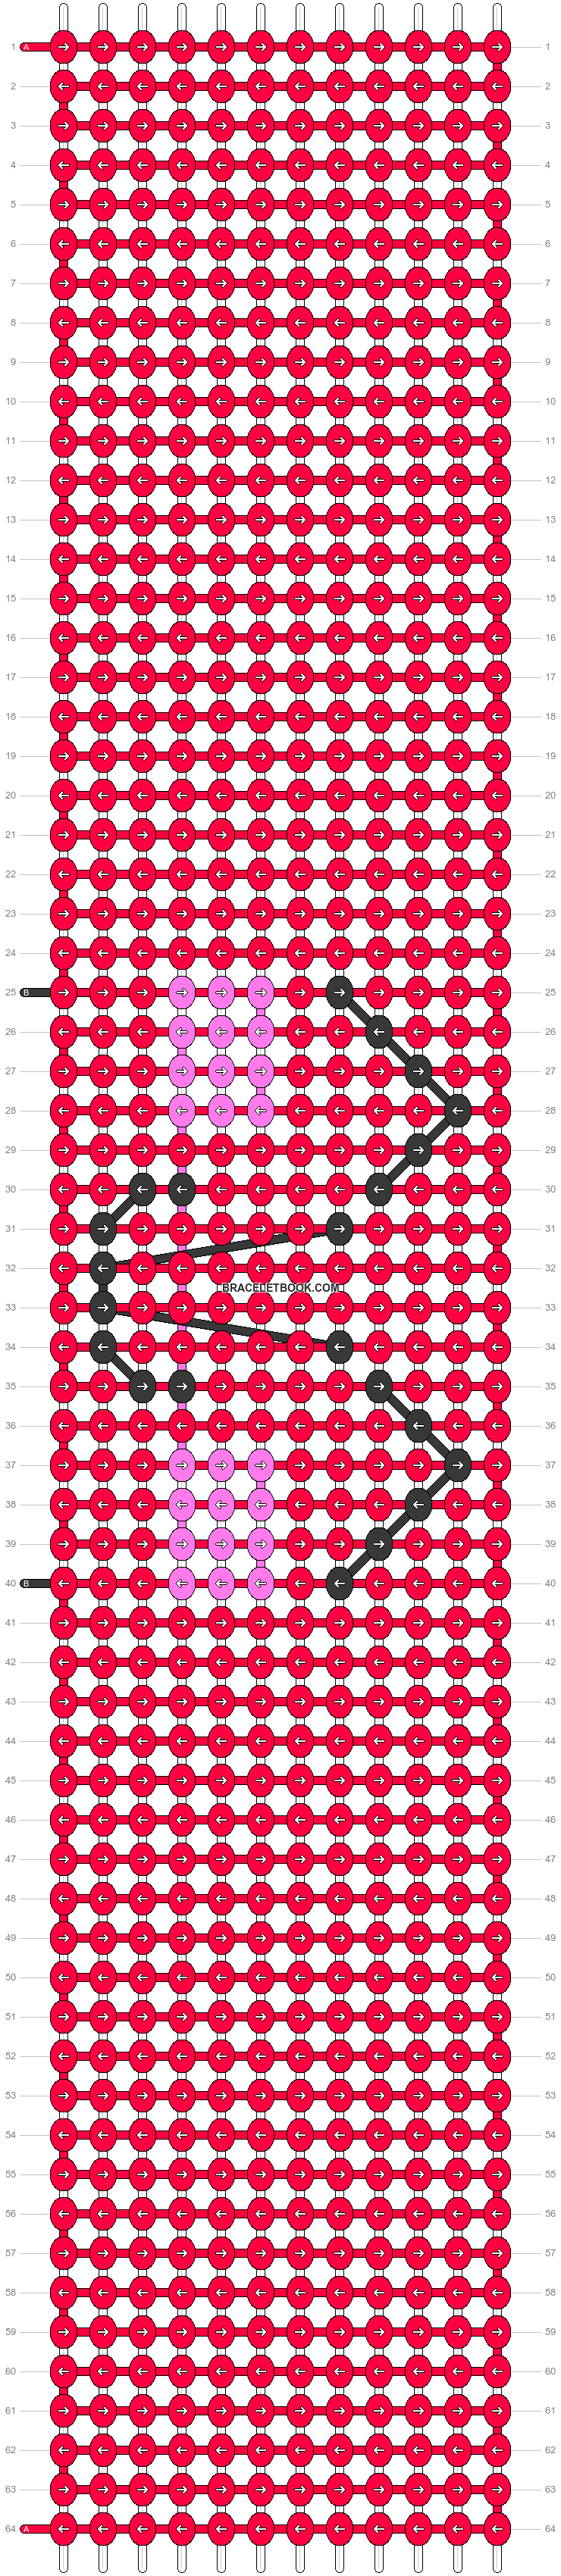 Alpha pattern #93603 pattern